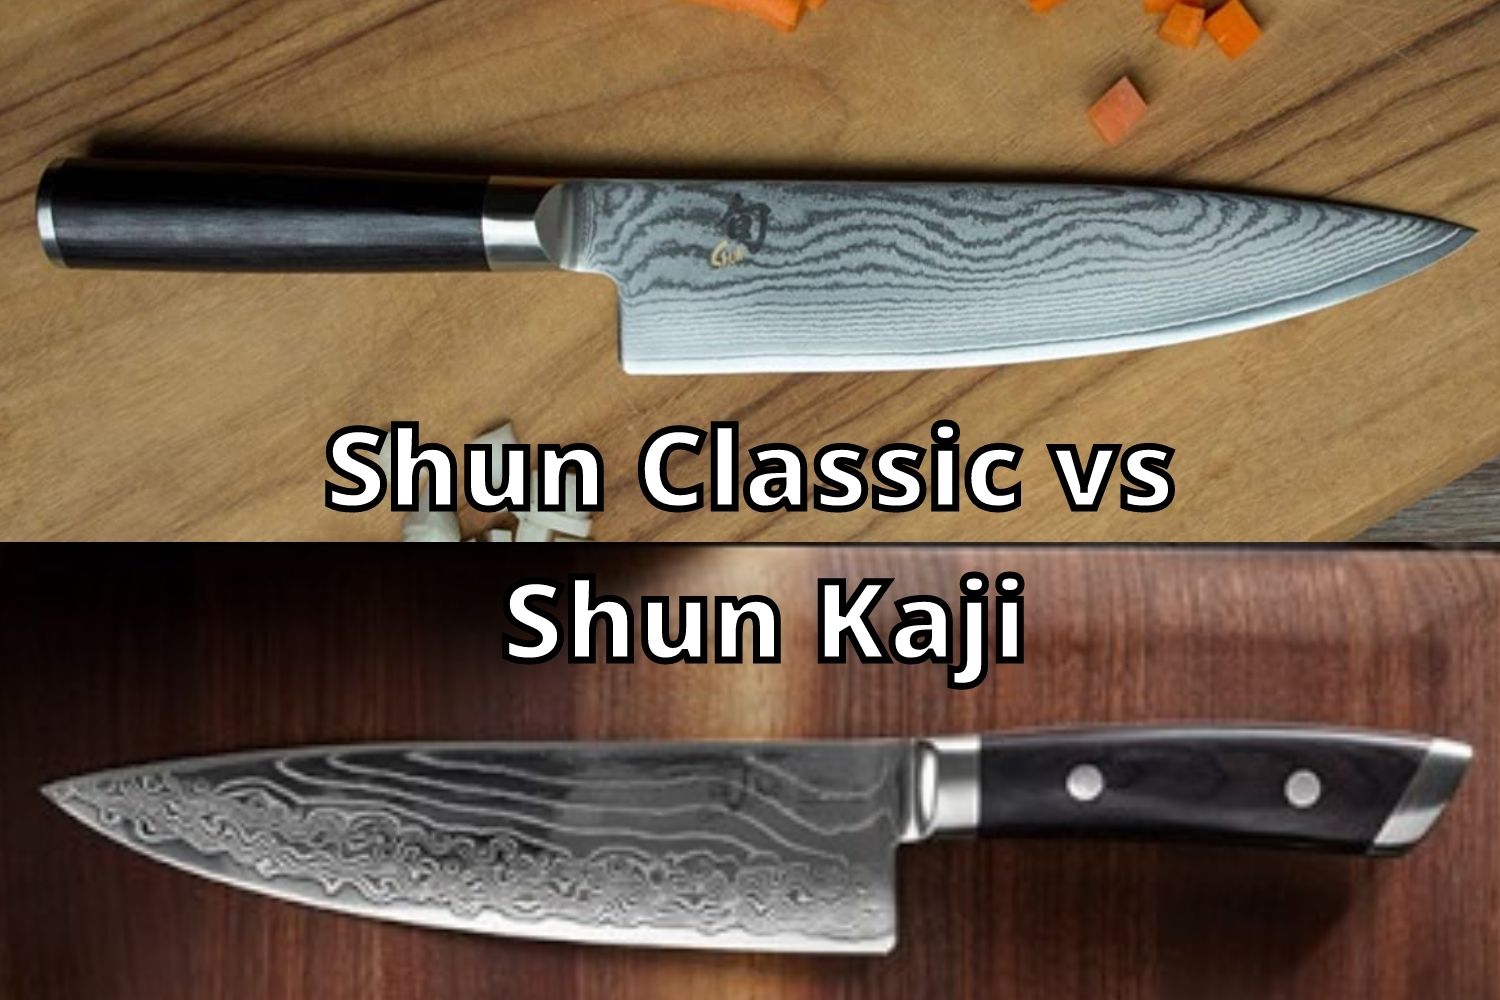 Shun Classic vs Kaji